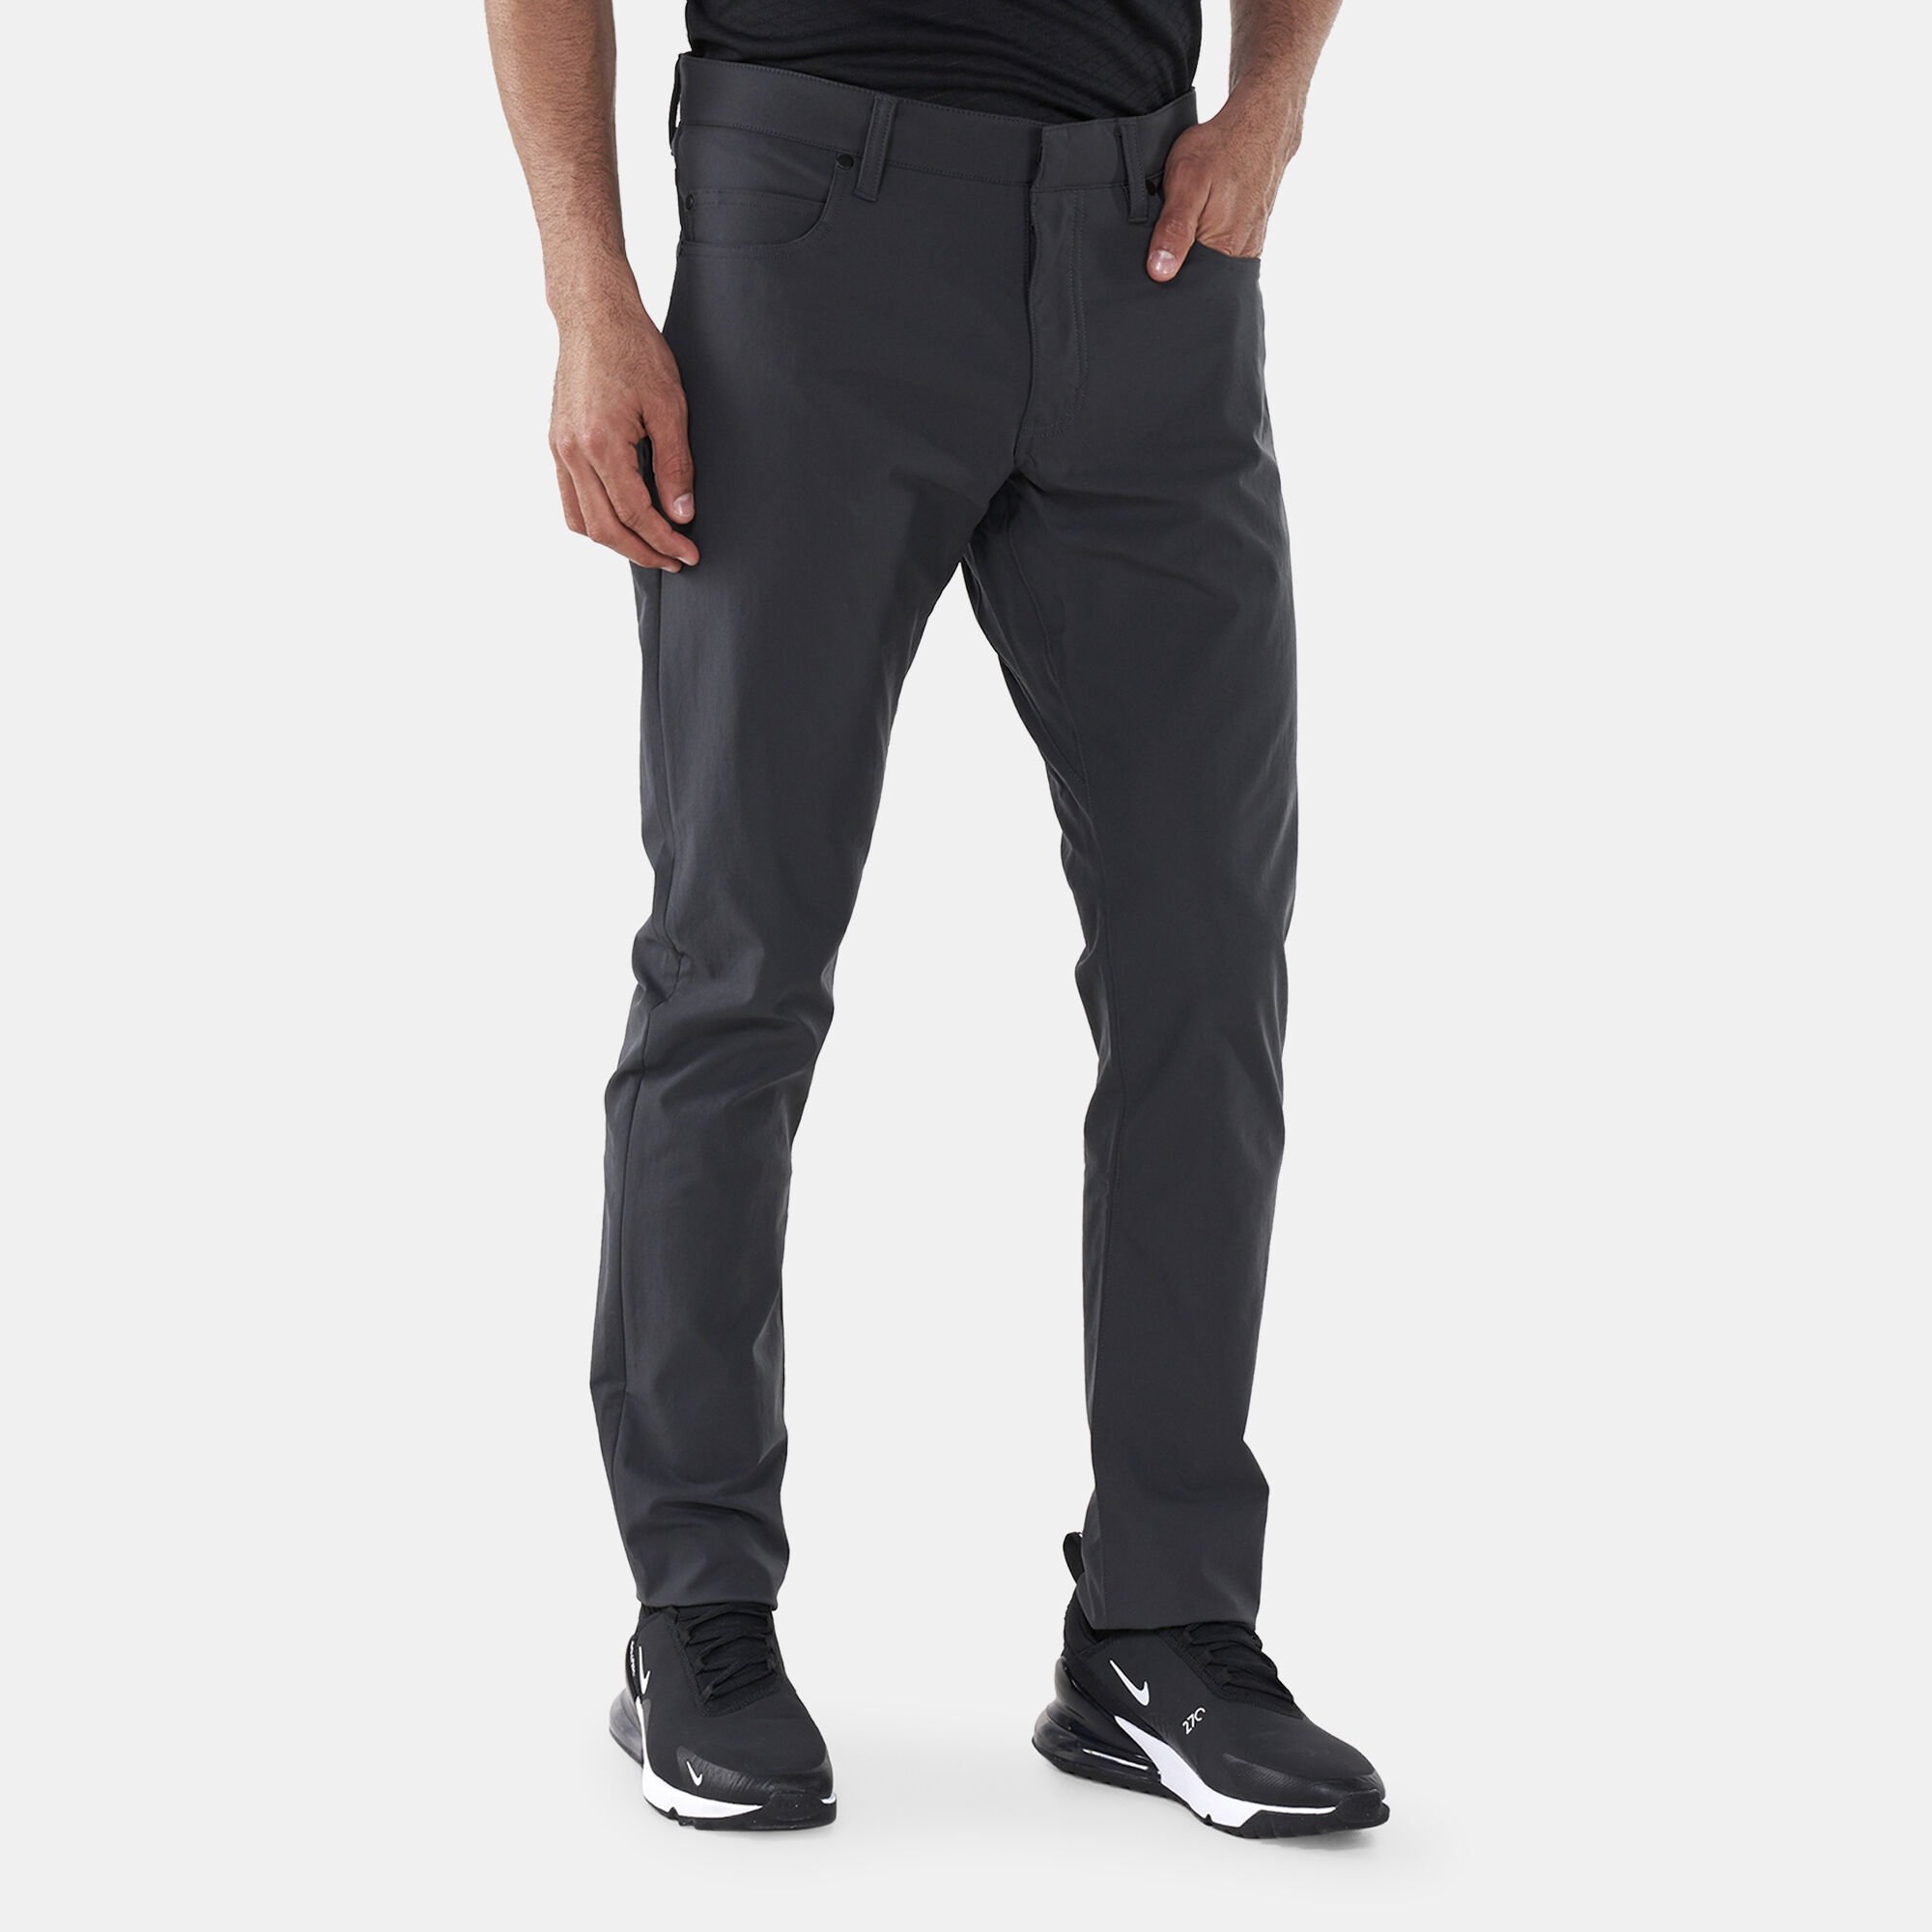 Nike Men's Flex Slim Fit 6 Pocket Golf Pants Dri-fit 38 x 32 Gray  BV0278-042 | eBay